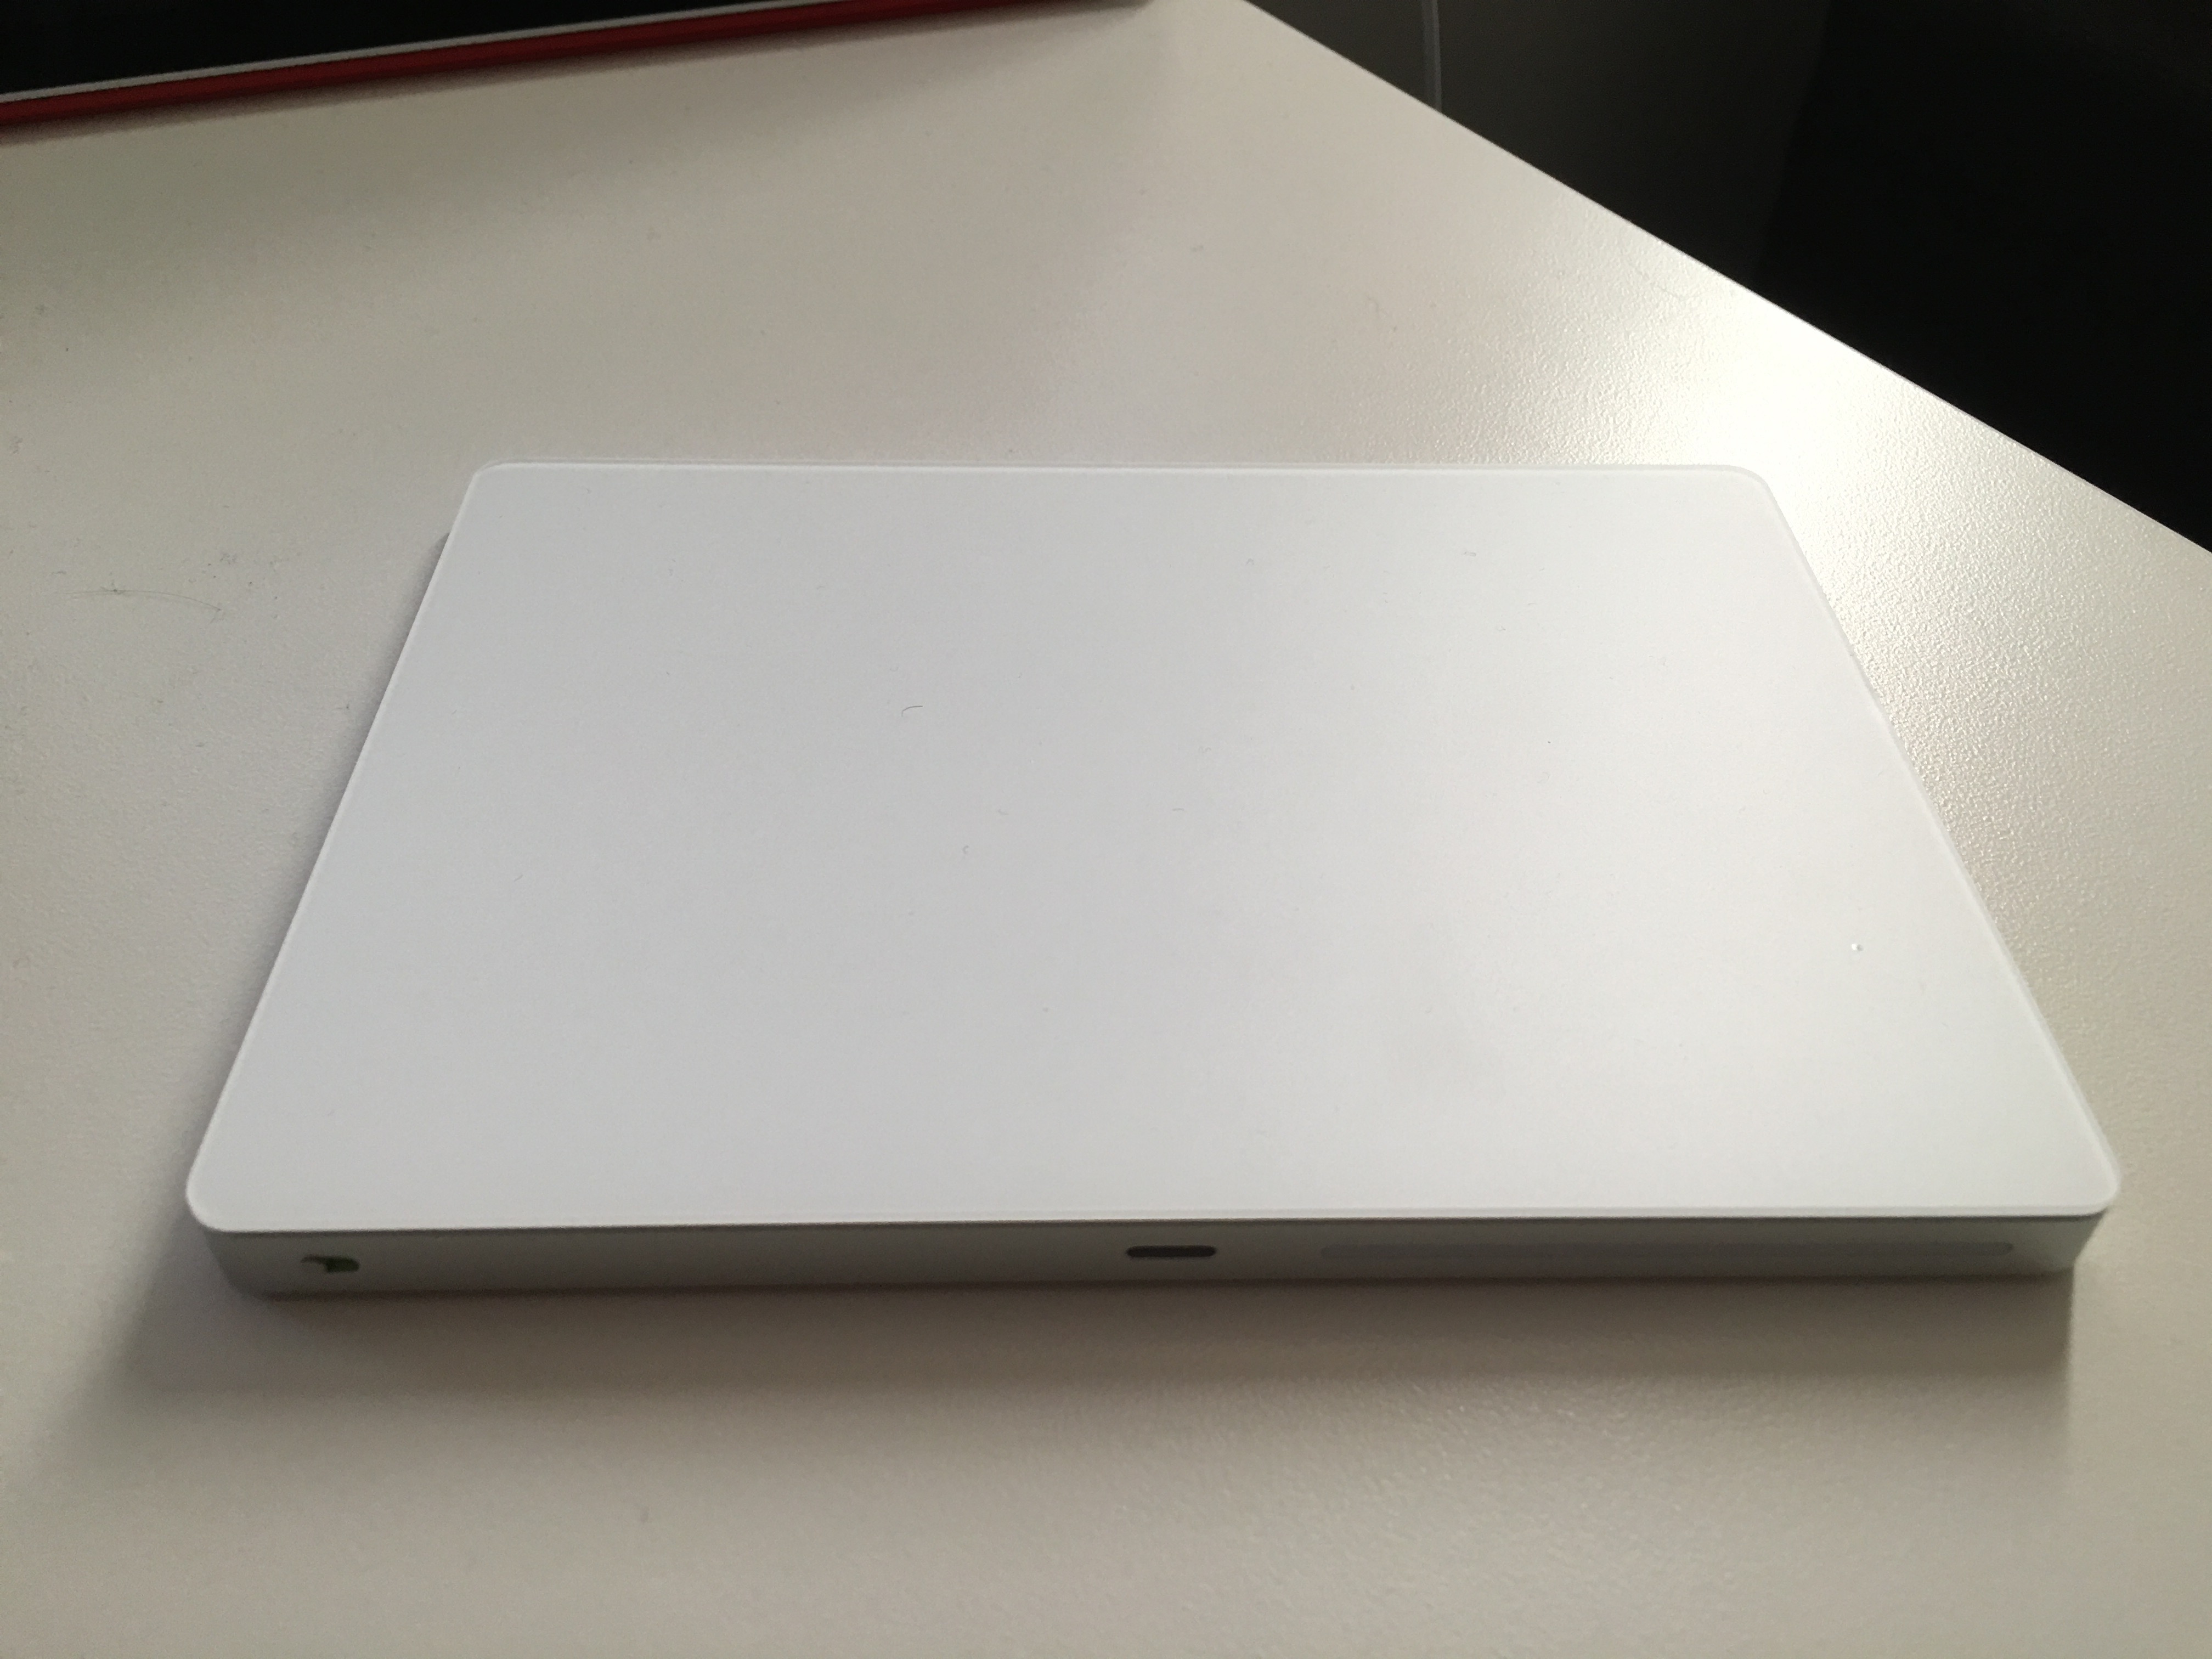 Apple Magic Trackpad 2 - White MJ2R2LL/A Brand-New